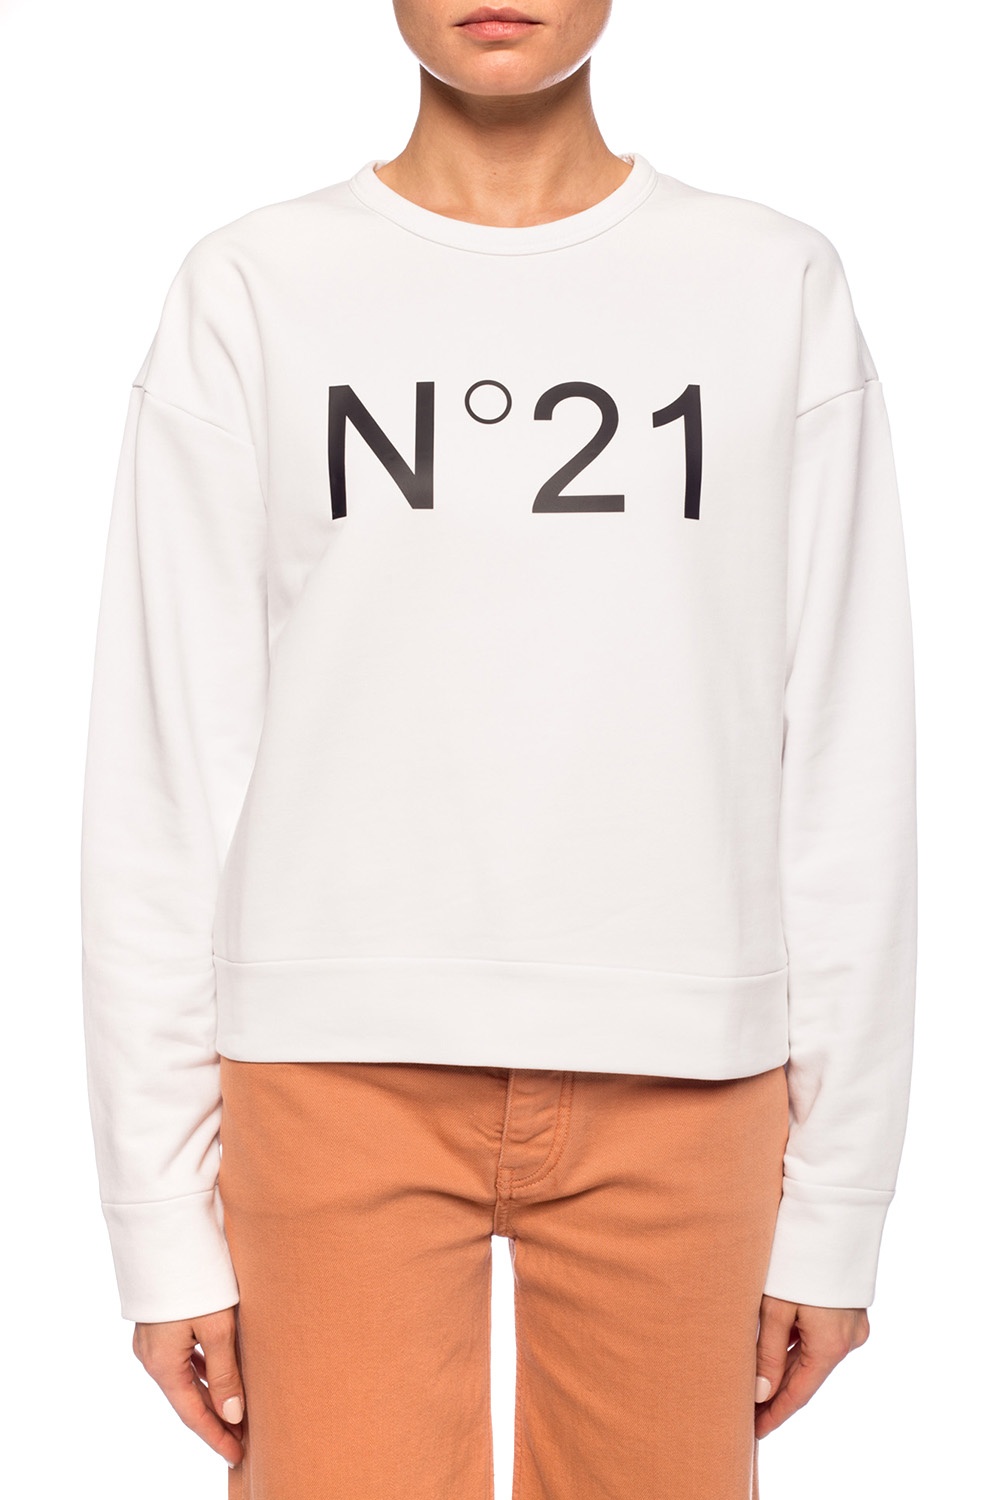 N°21 Sweatshirt with logo Women's | Vitkac